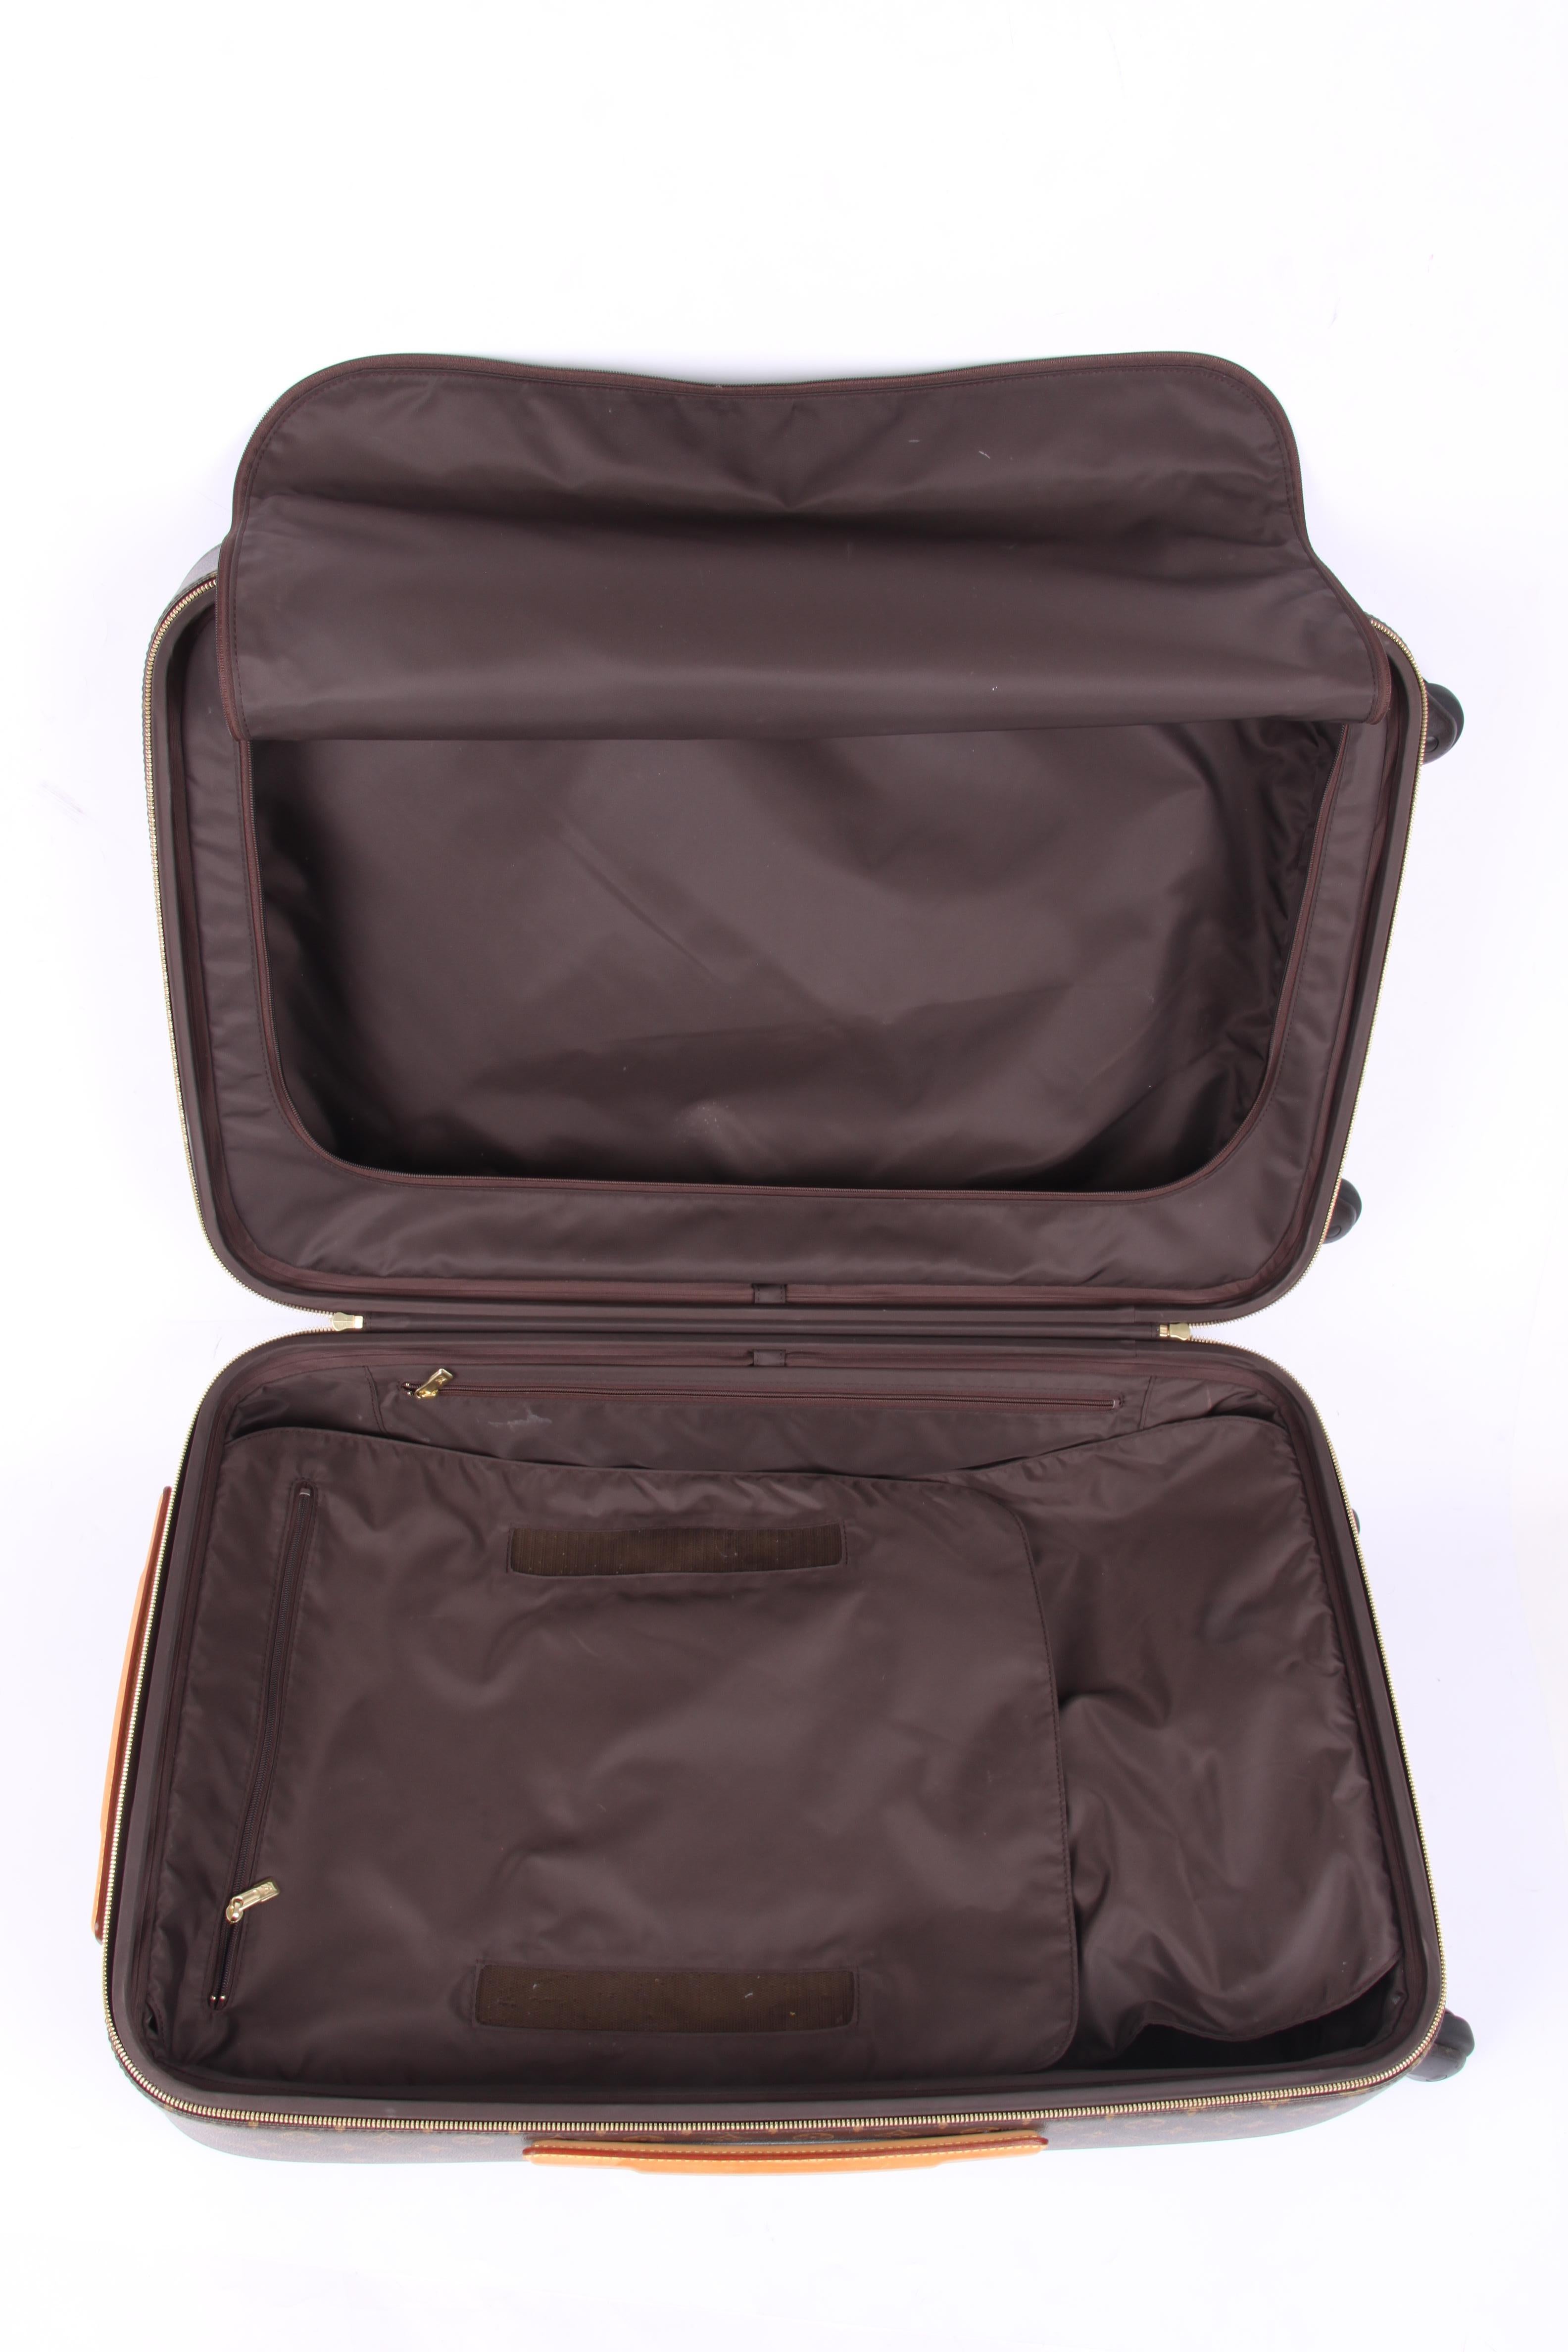   Louis Vuitton Monogram Zephyr 70 Rolling Luggage Bag Suitcase - brown   For Sale 5